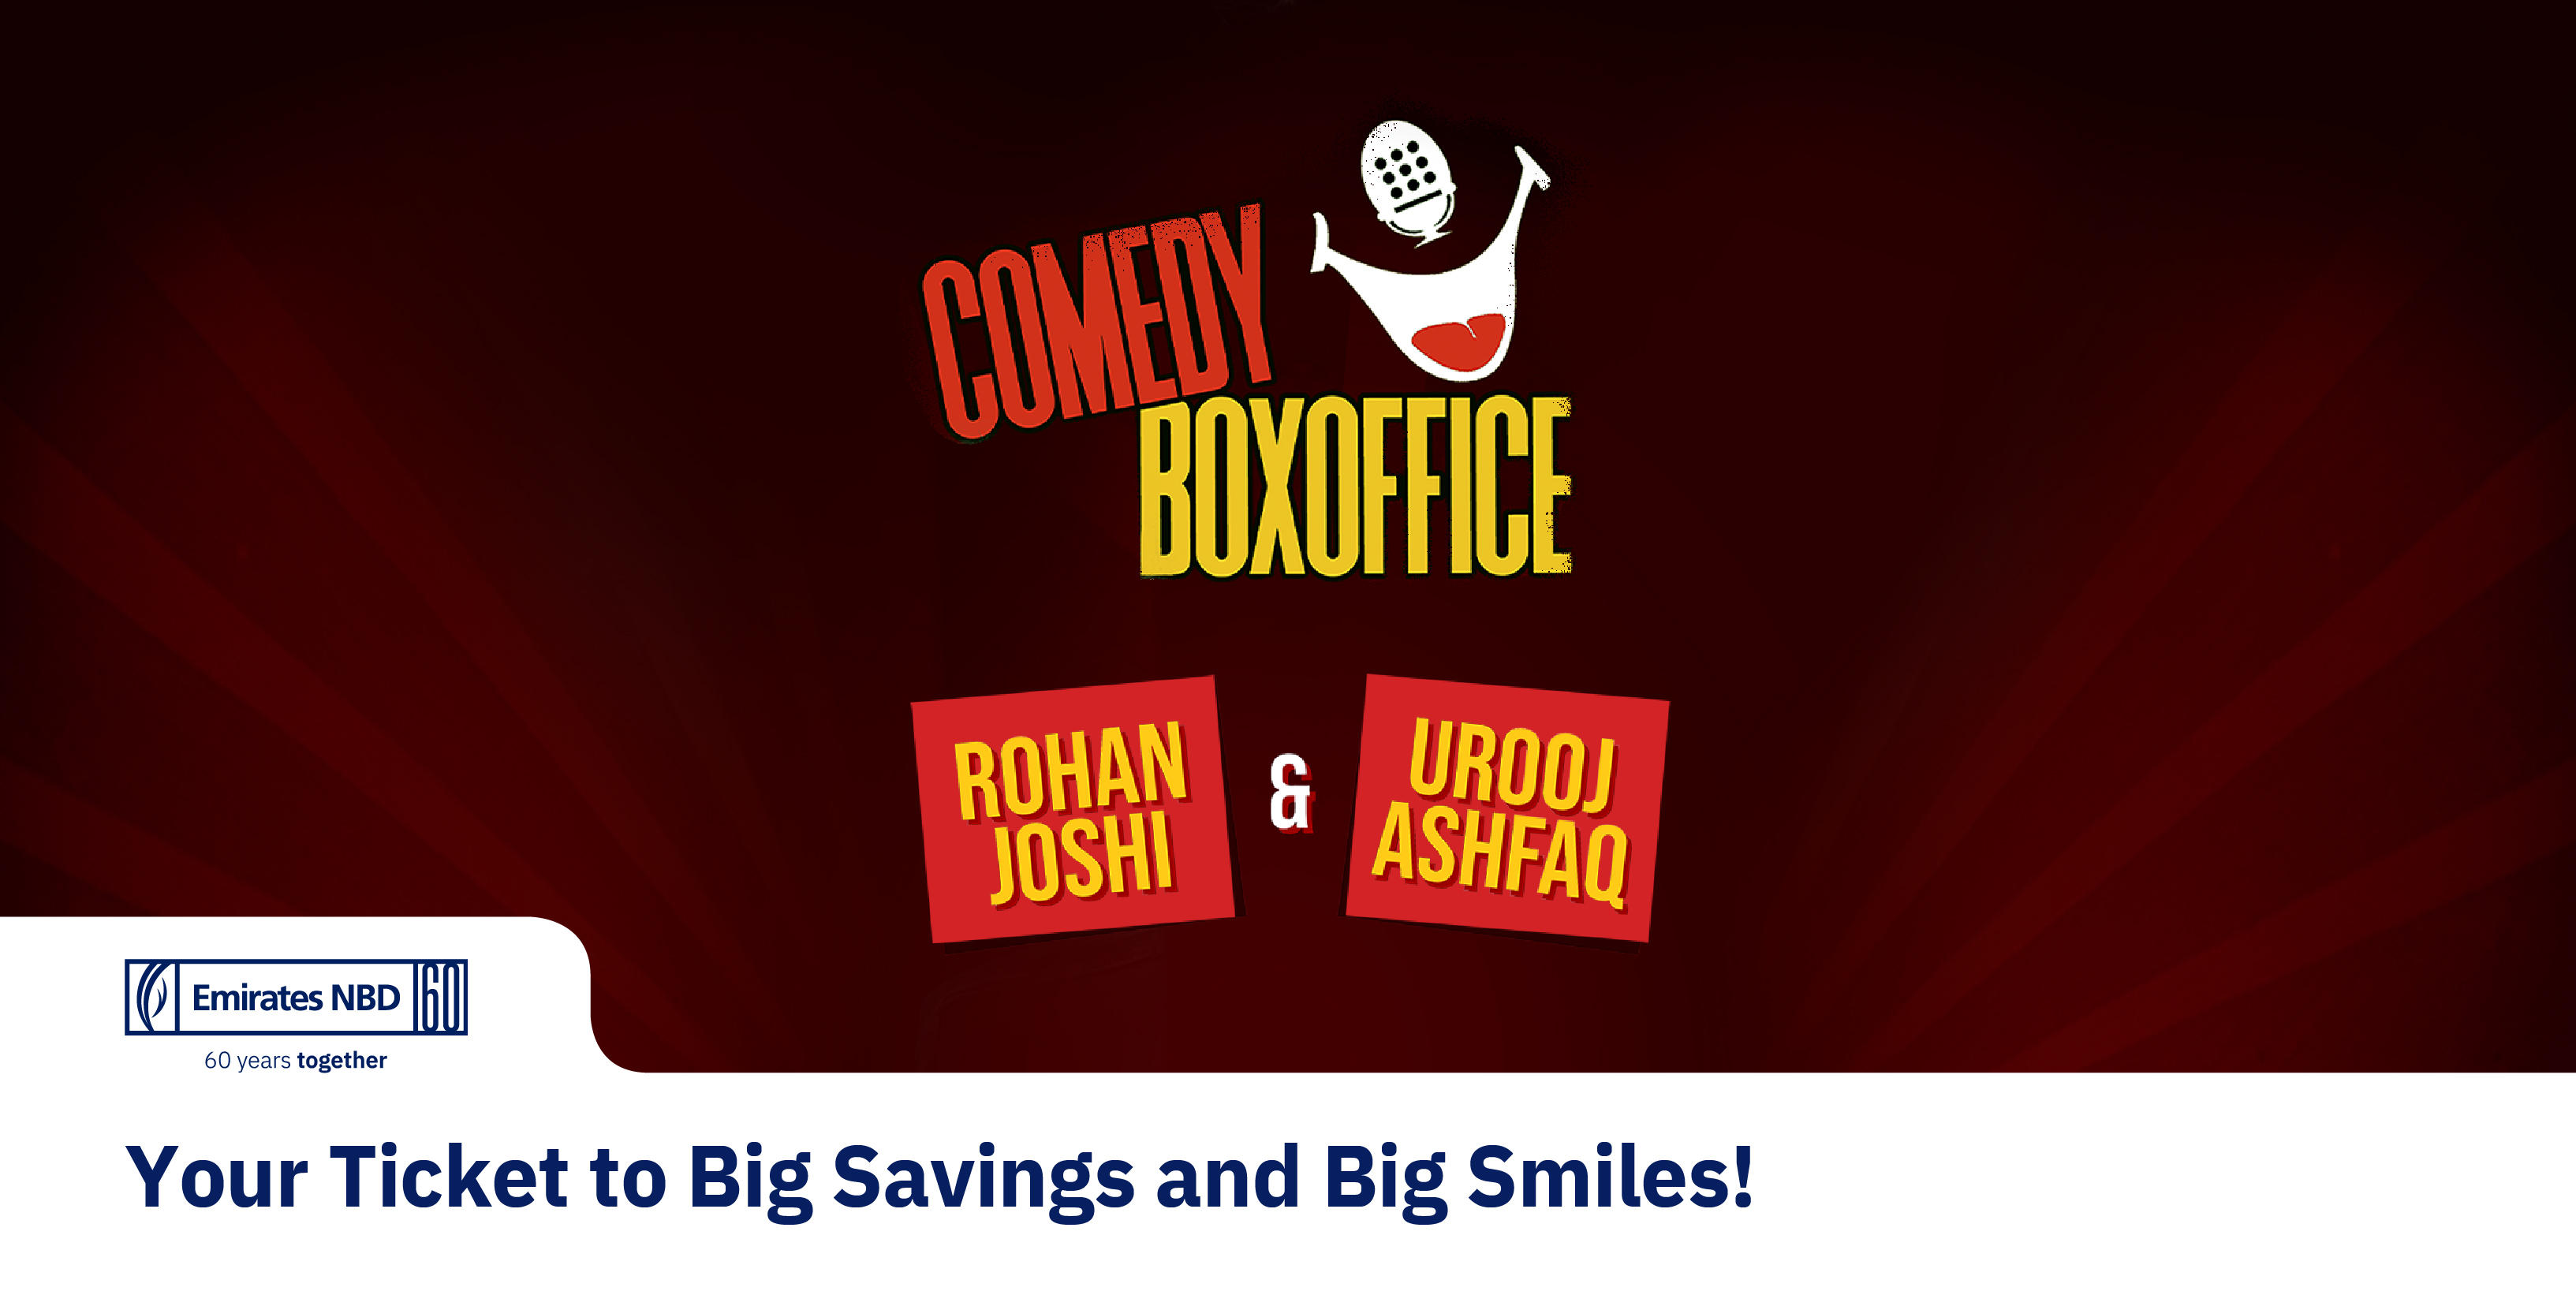 Dubai: Comedians Rohan Joshi & Urooj Ashfaq to perform live